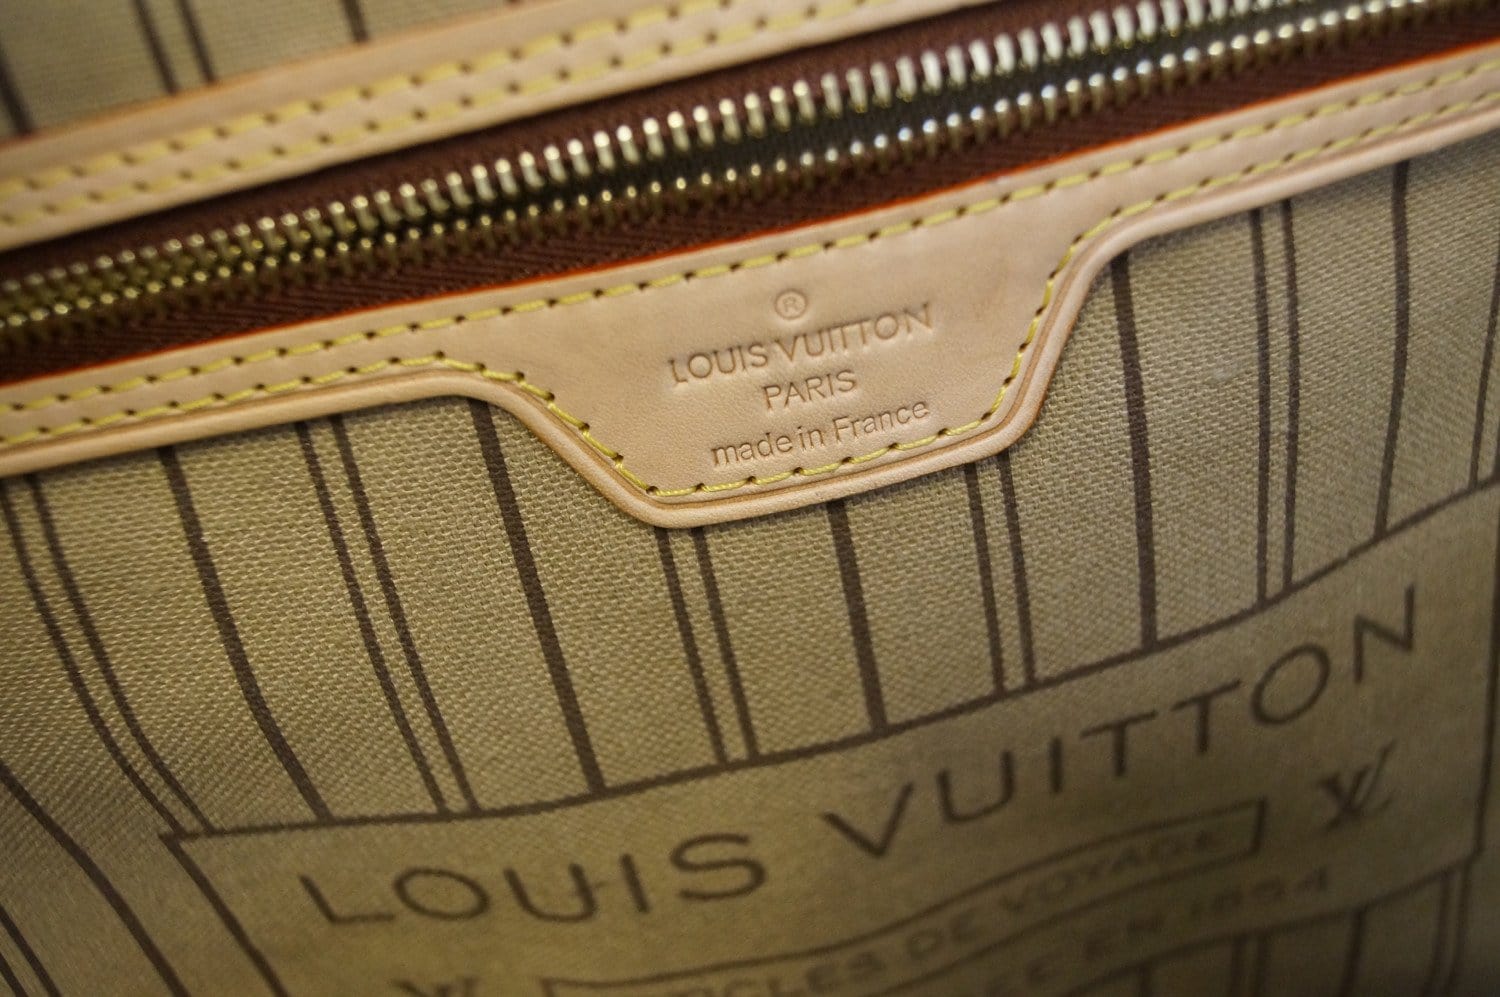 ❤️‍🩹SOLD❤️‍🩹 BRAND NEW Louis Vuitton Neverfull MM Monogram